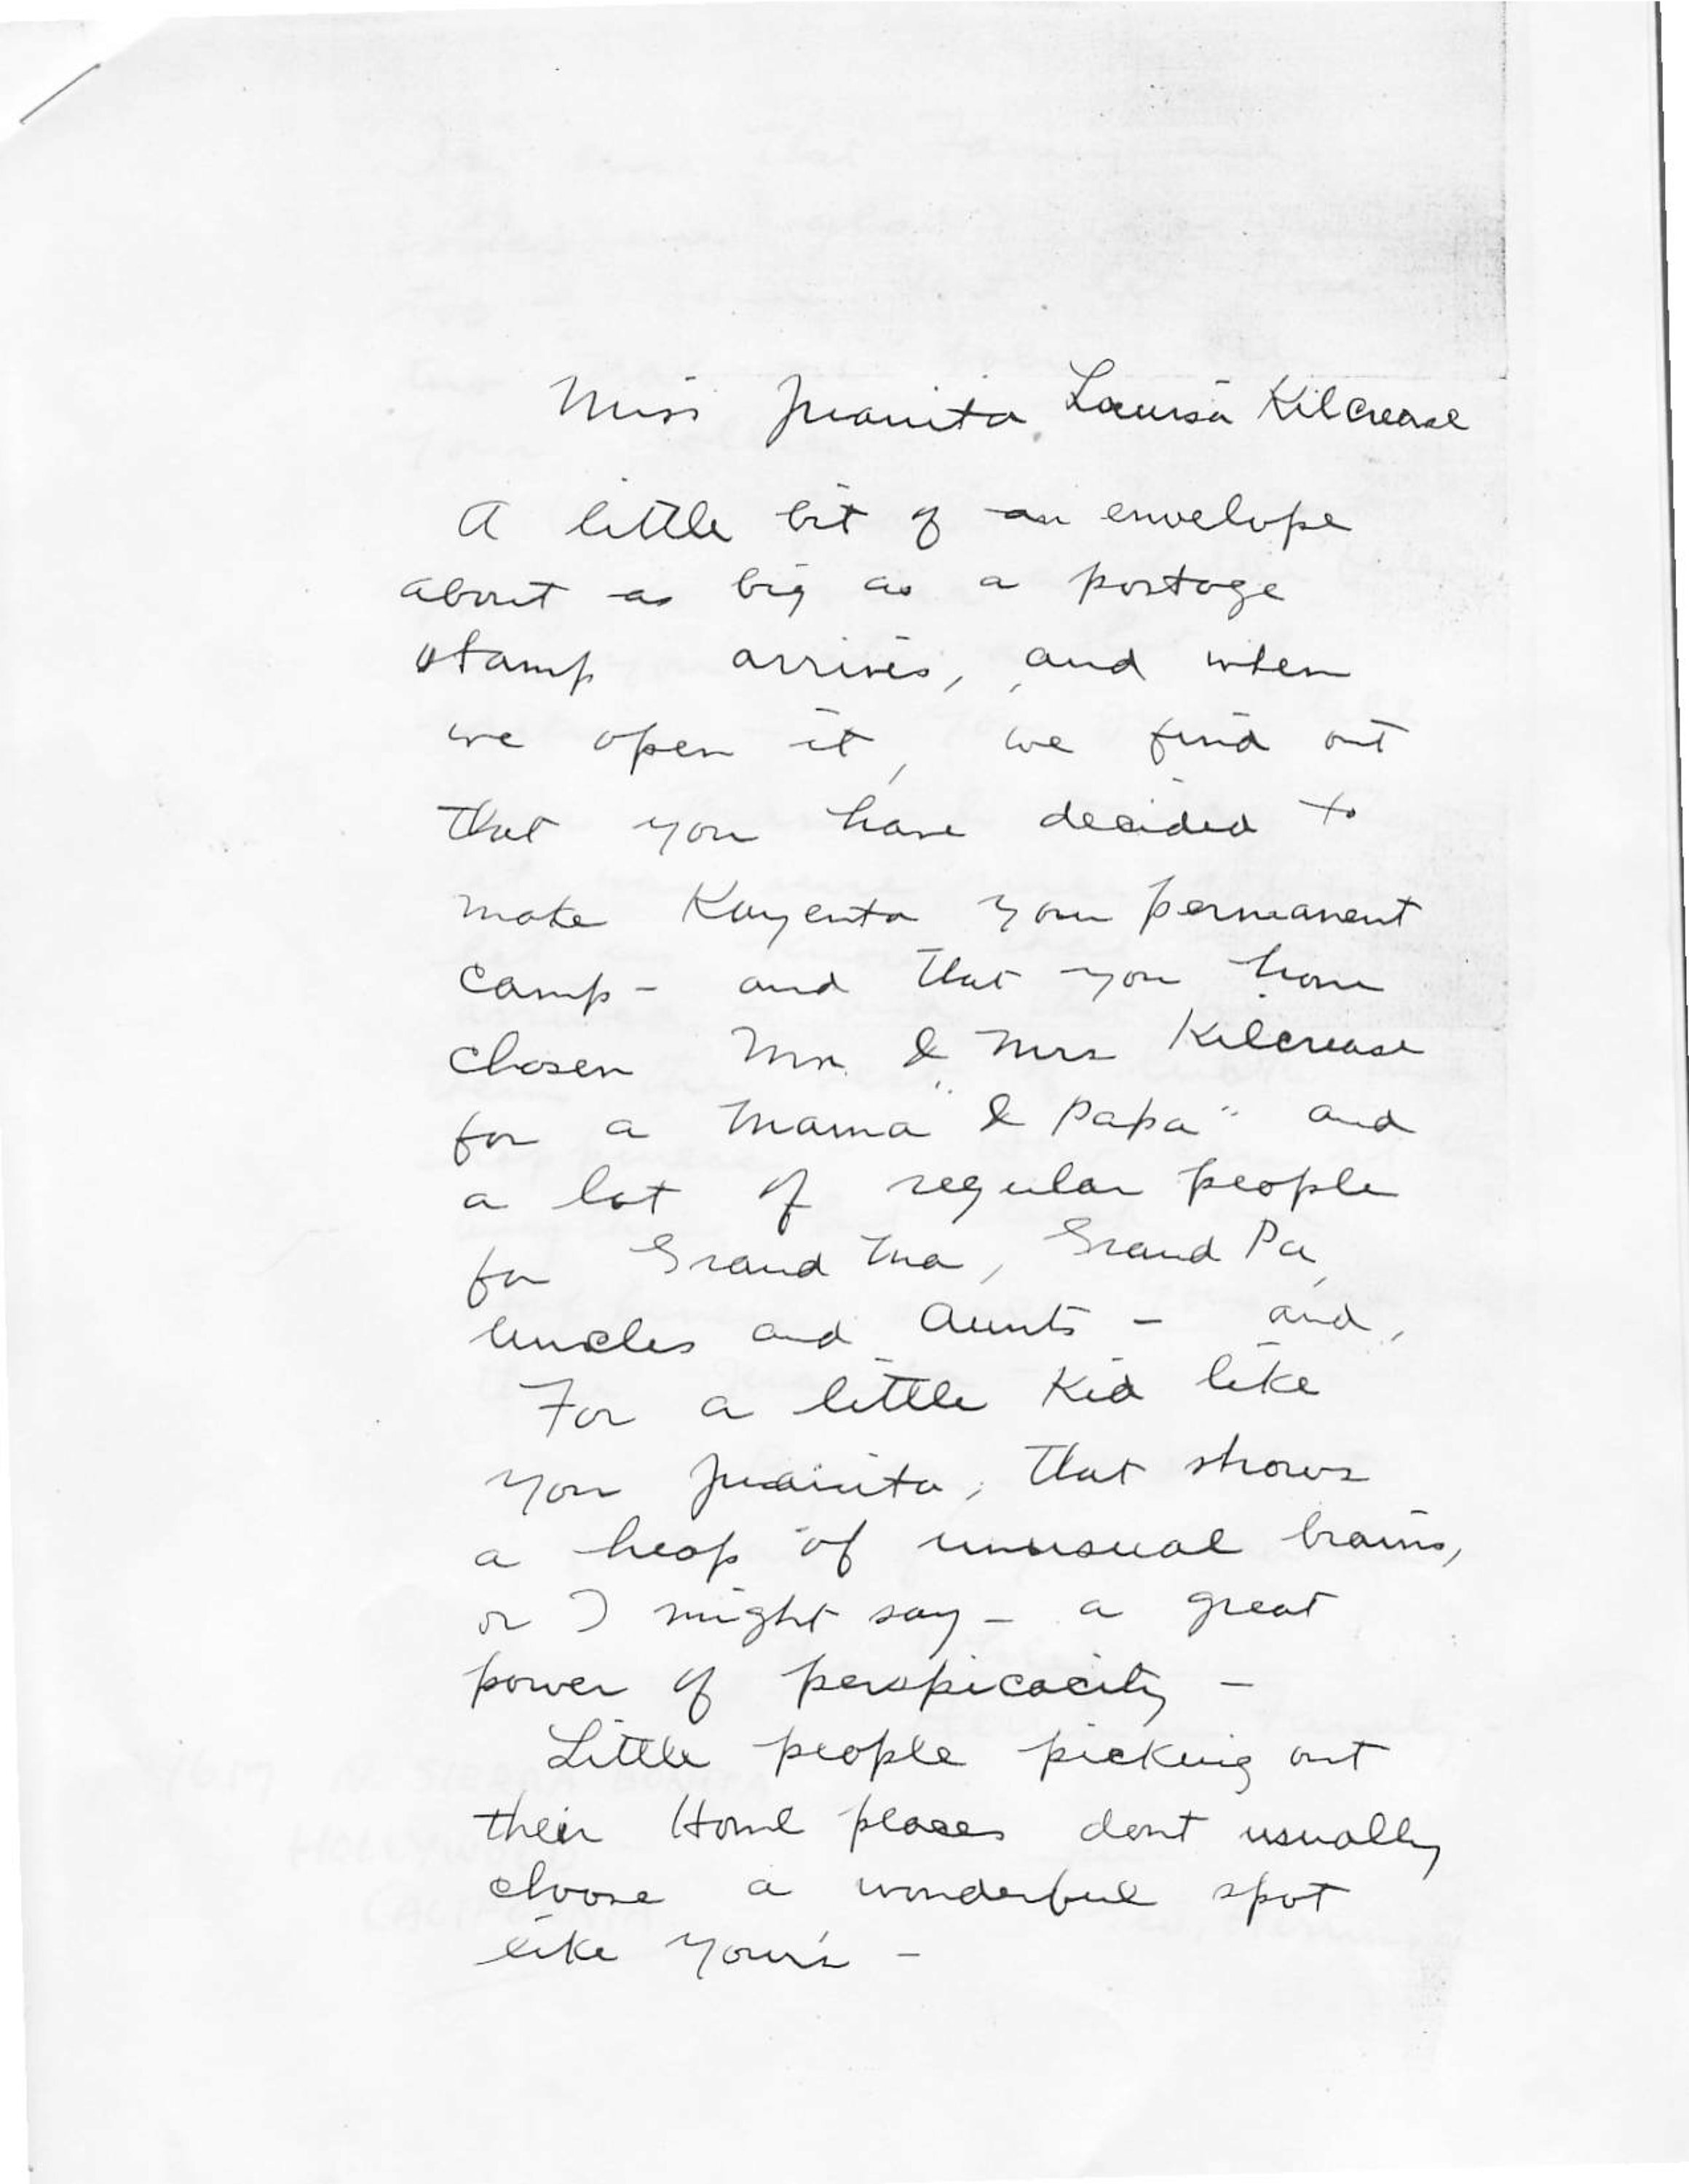 19-1923-george-herriman-letter-to-juanita-kilcrease.jpg